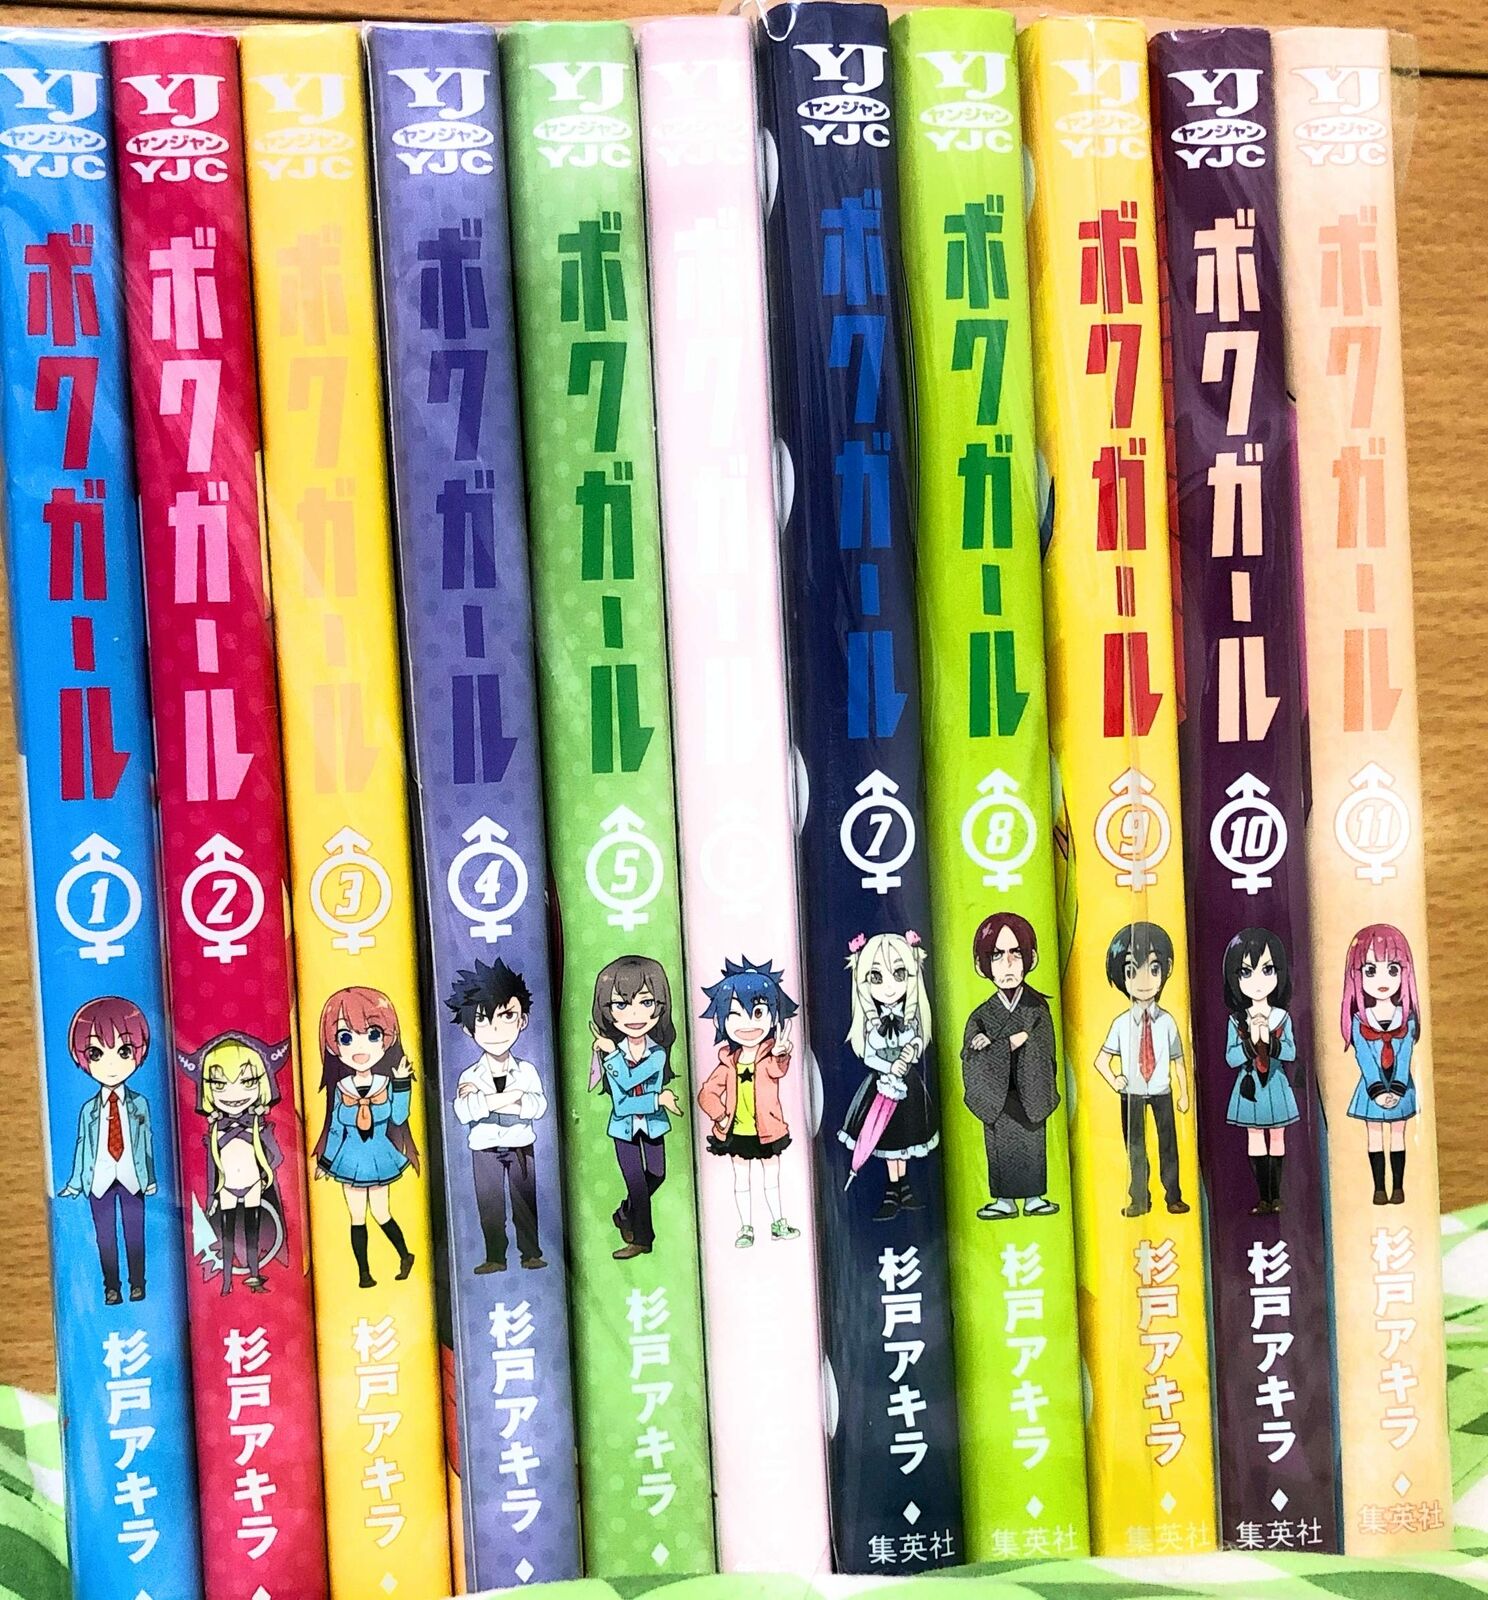 Boku Girl vol. 1-11 Complete Full set Manga Comics Japanese language 